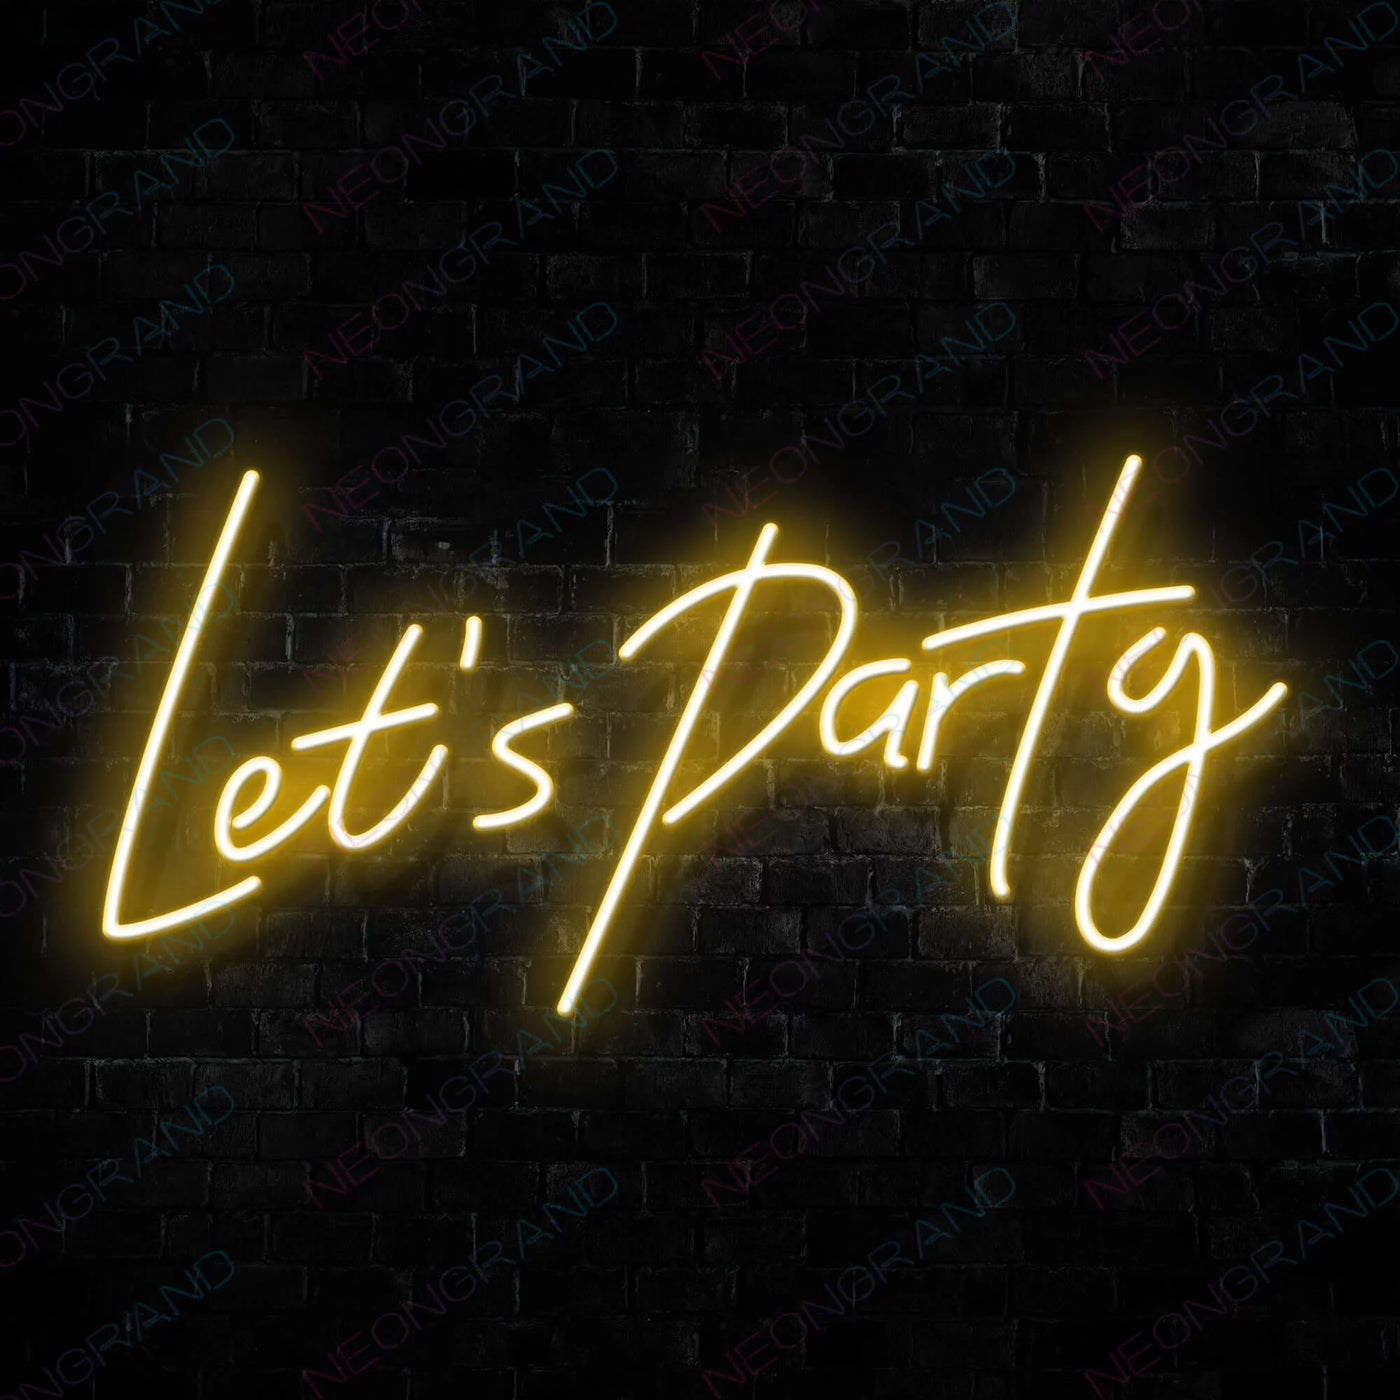 Let's Party Neon Sign Led Light Orange